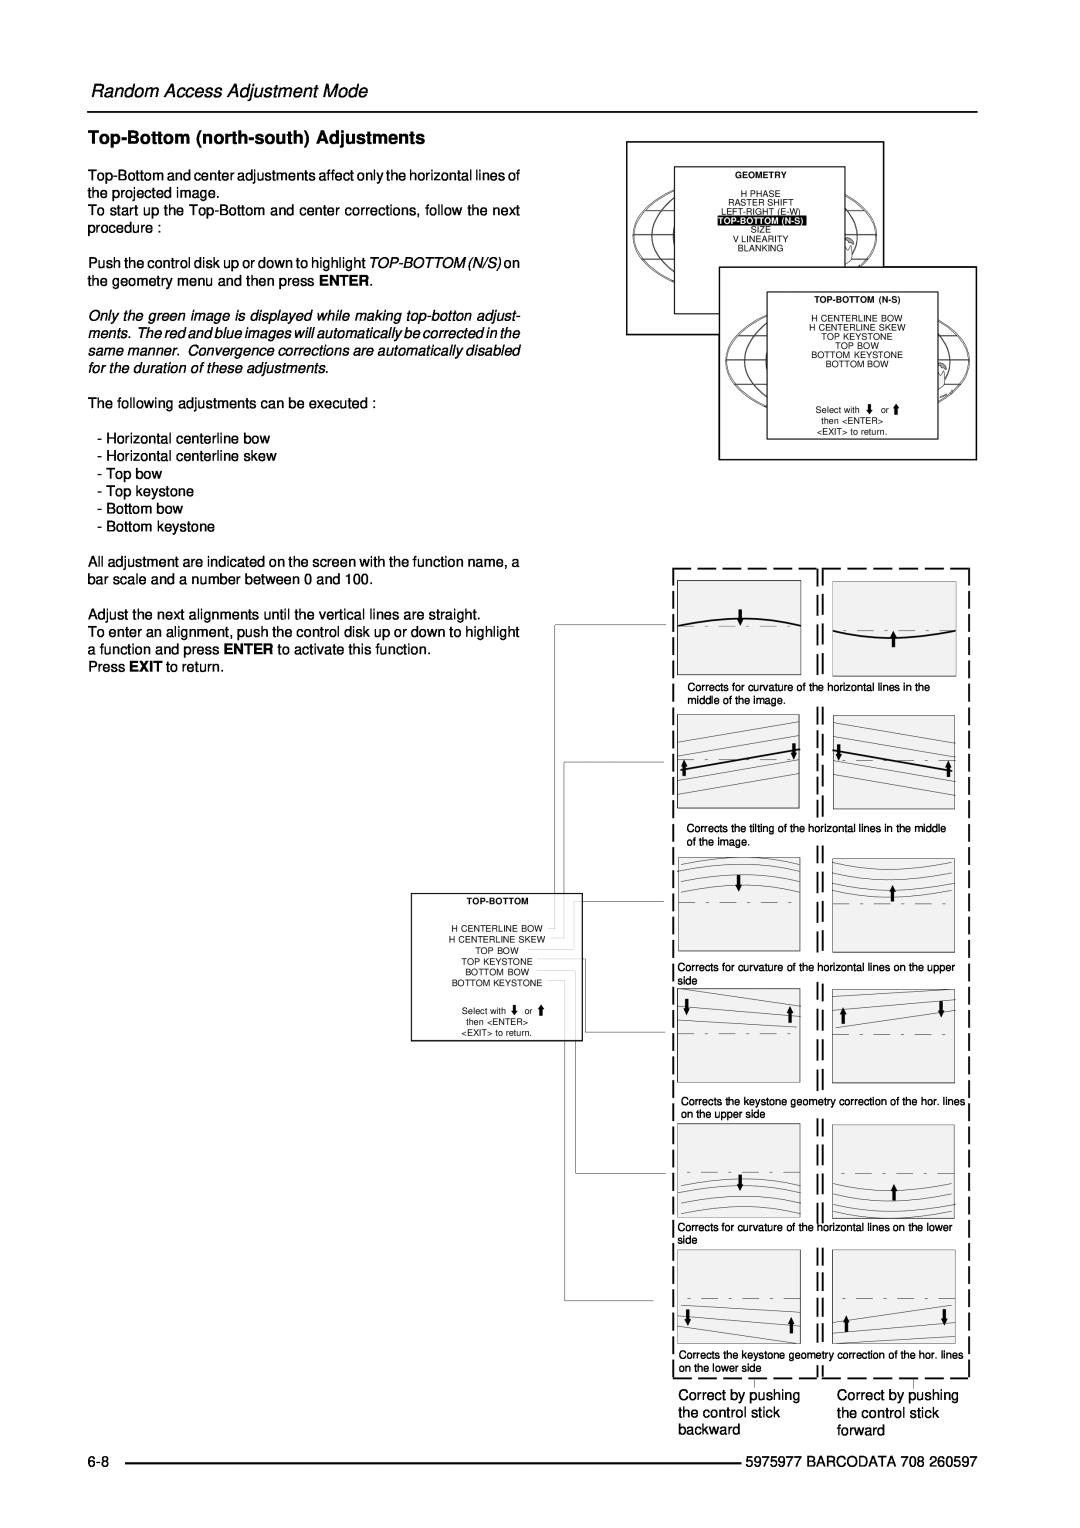 Barco R9002120 manual Top-Bottom north-south Adjustments, Random Access Adjustment Mode 